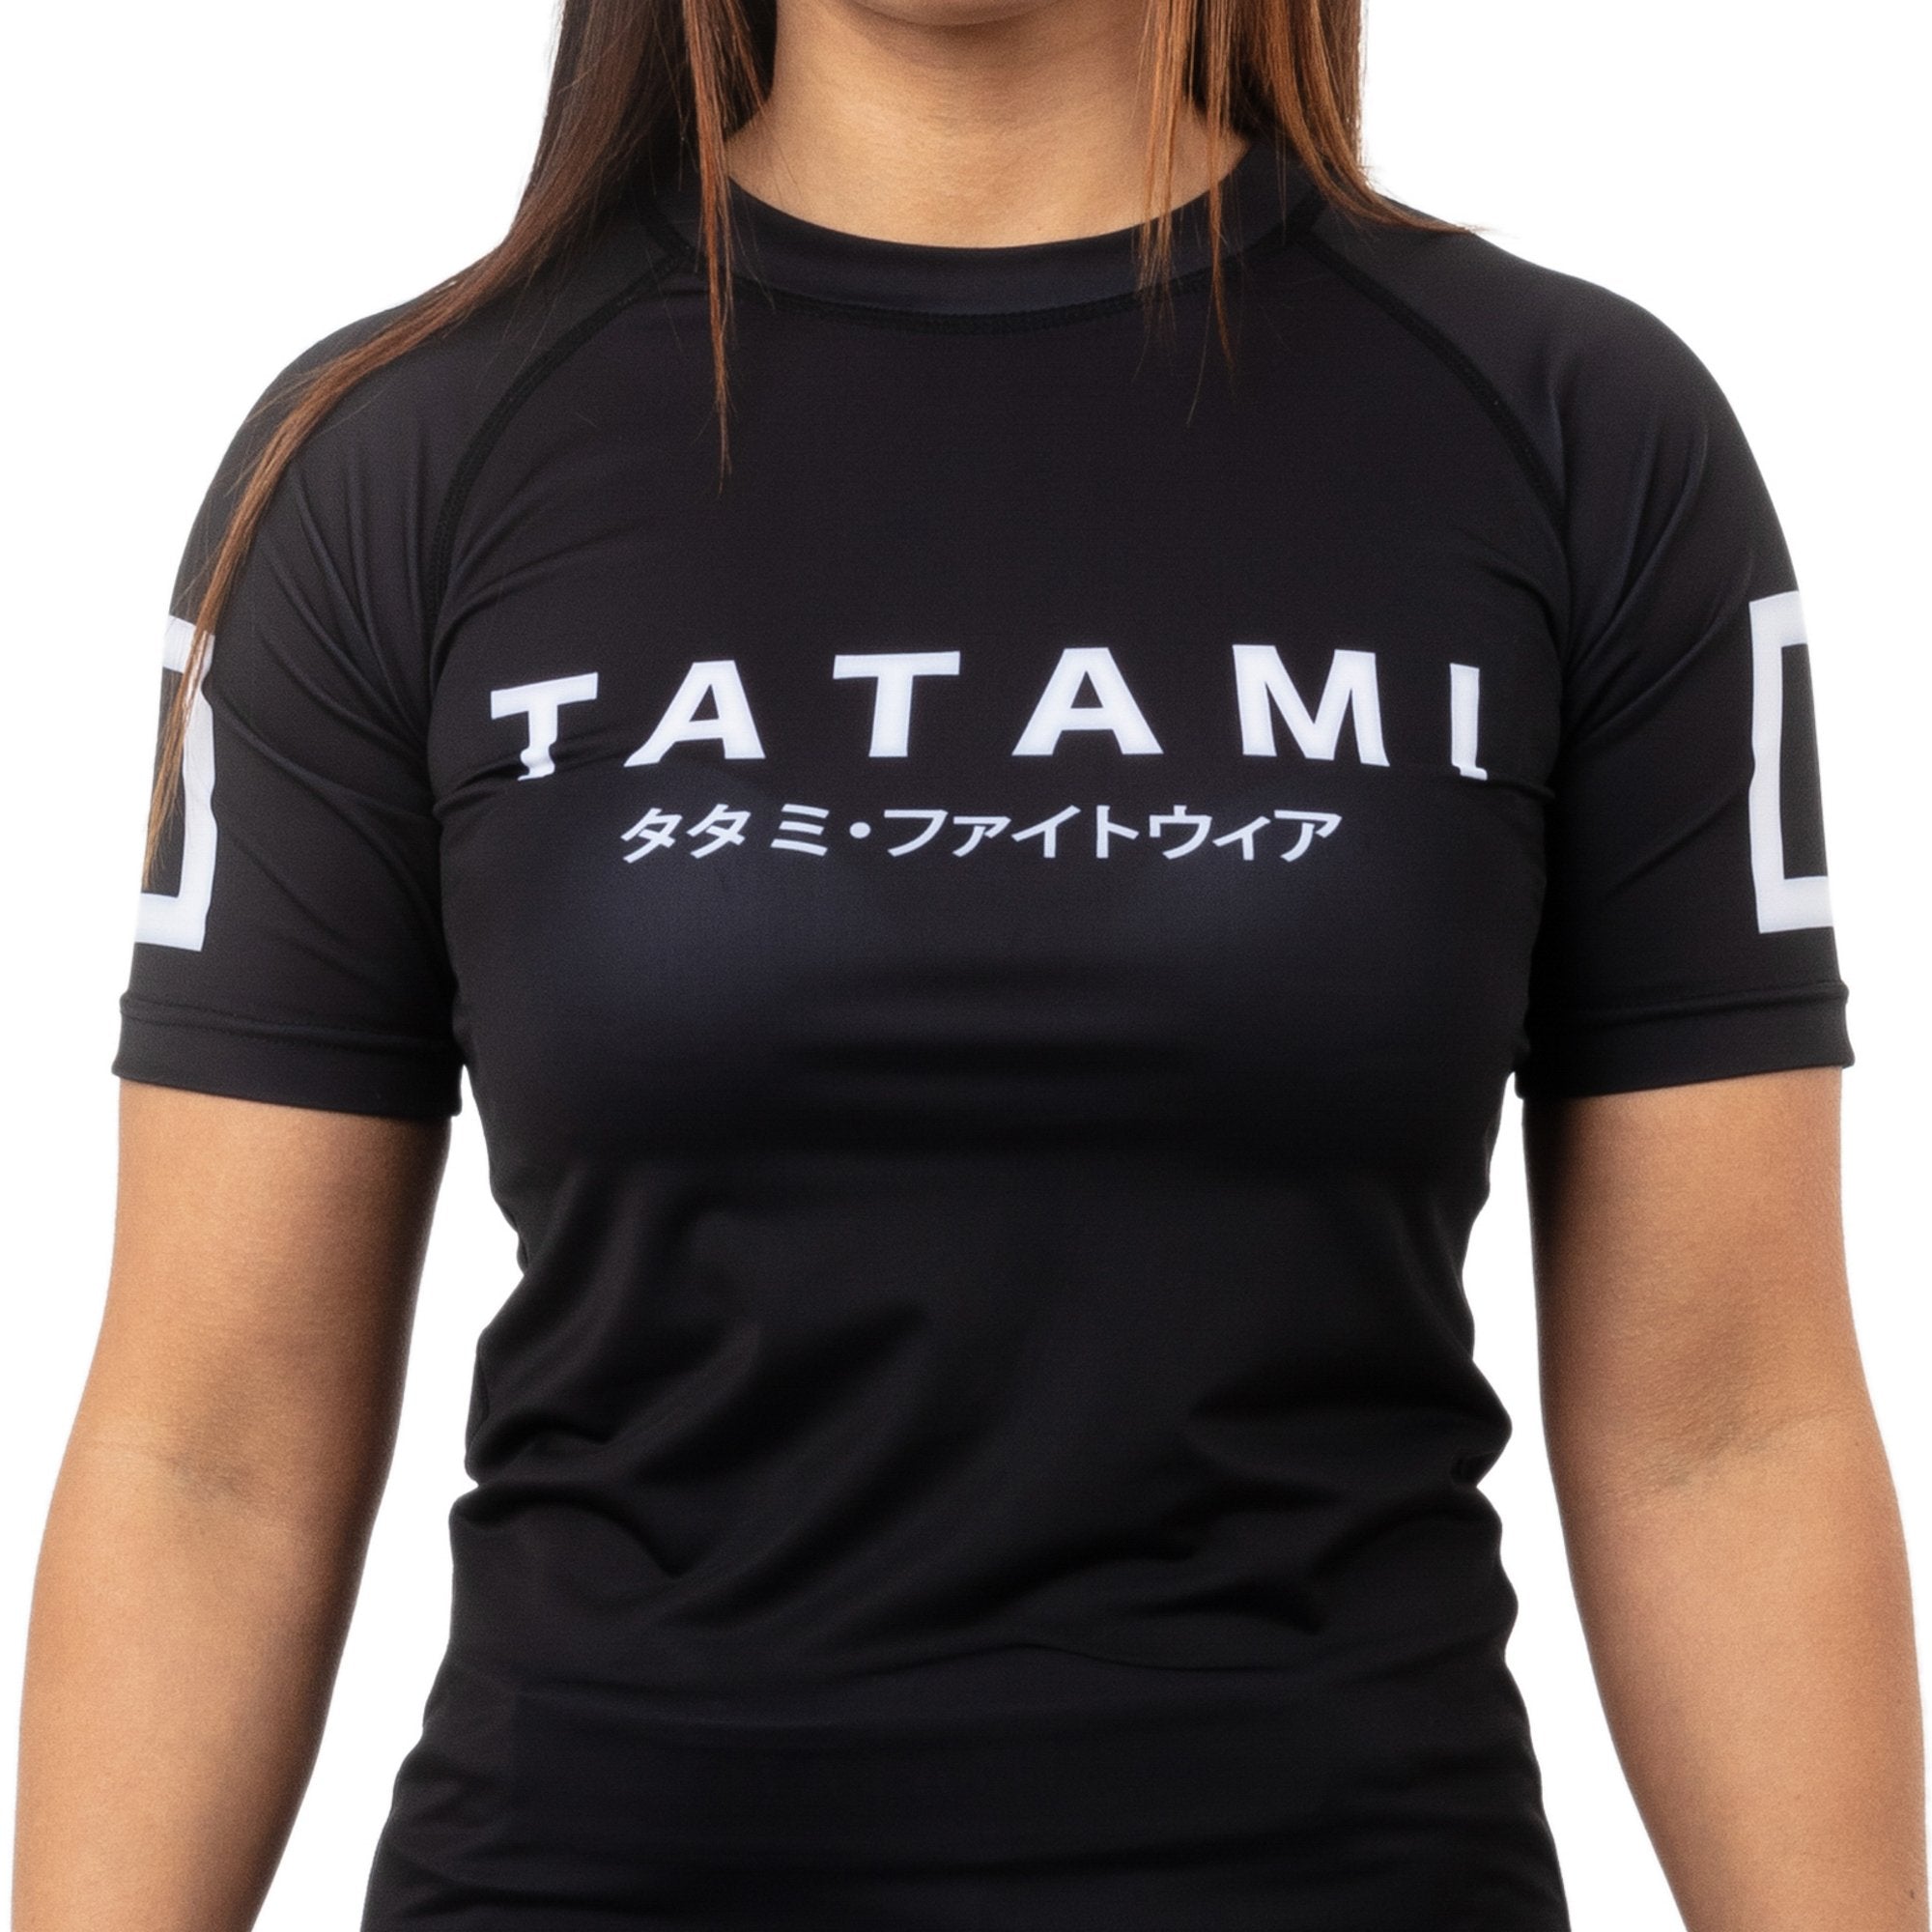 TATAMI Ladies Katakana Short Sleeve Rash Guard - Black